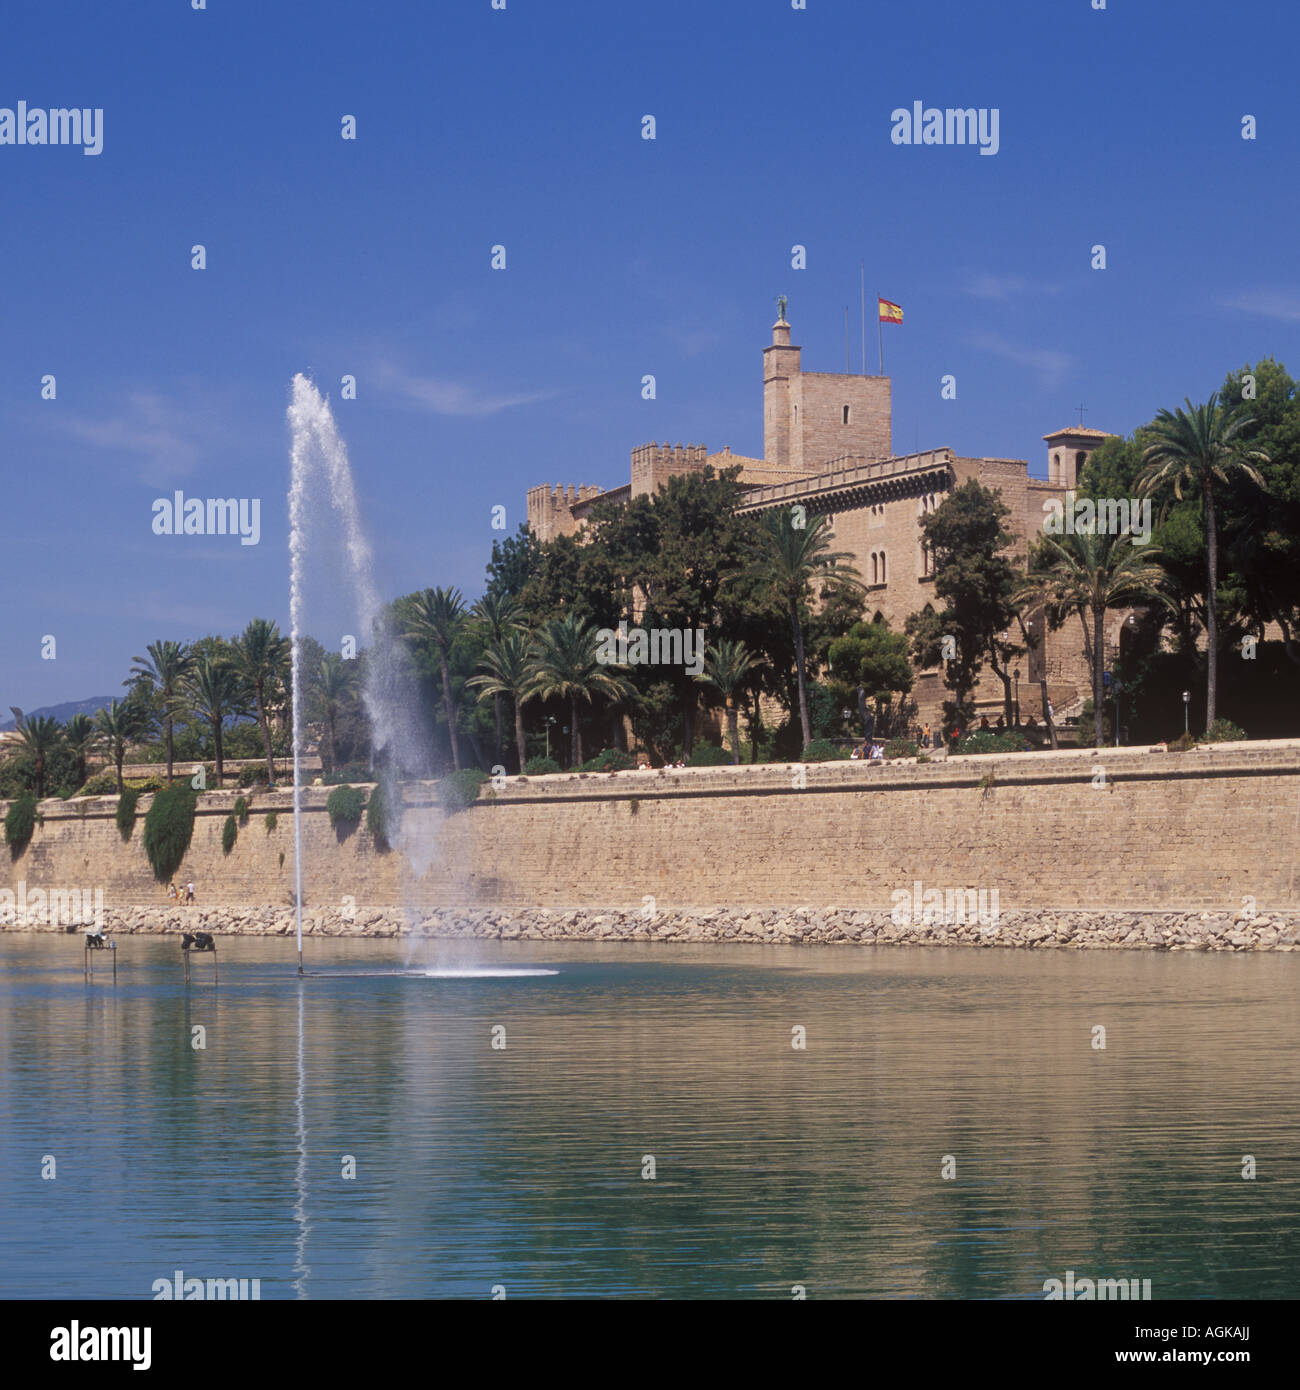 Almudaina Royal Palace + Parc de La Mar + fountain, Palma de Mallorca, Balearic Islands, Spain. Stock Photo